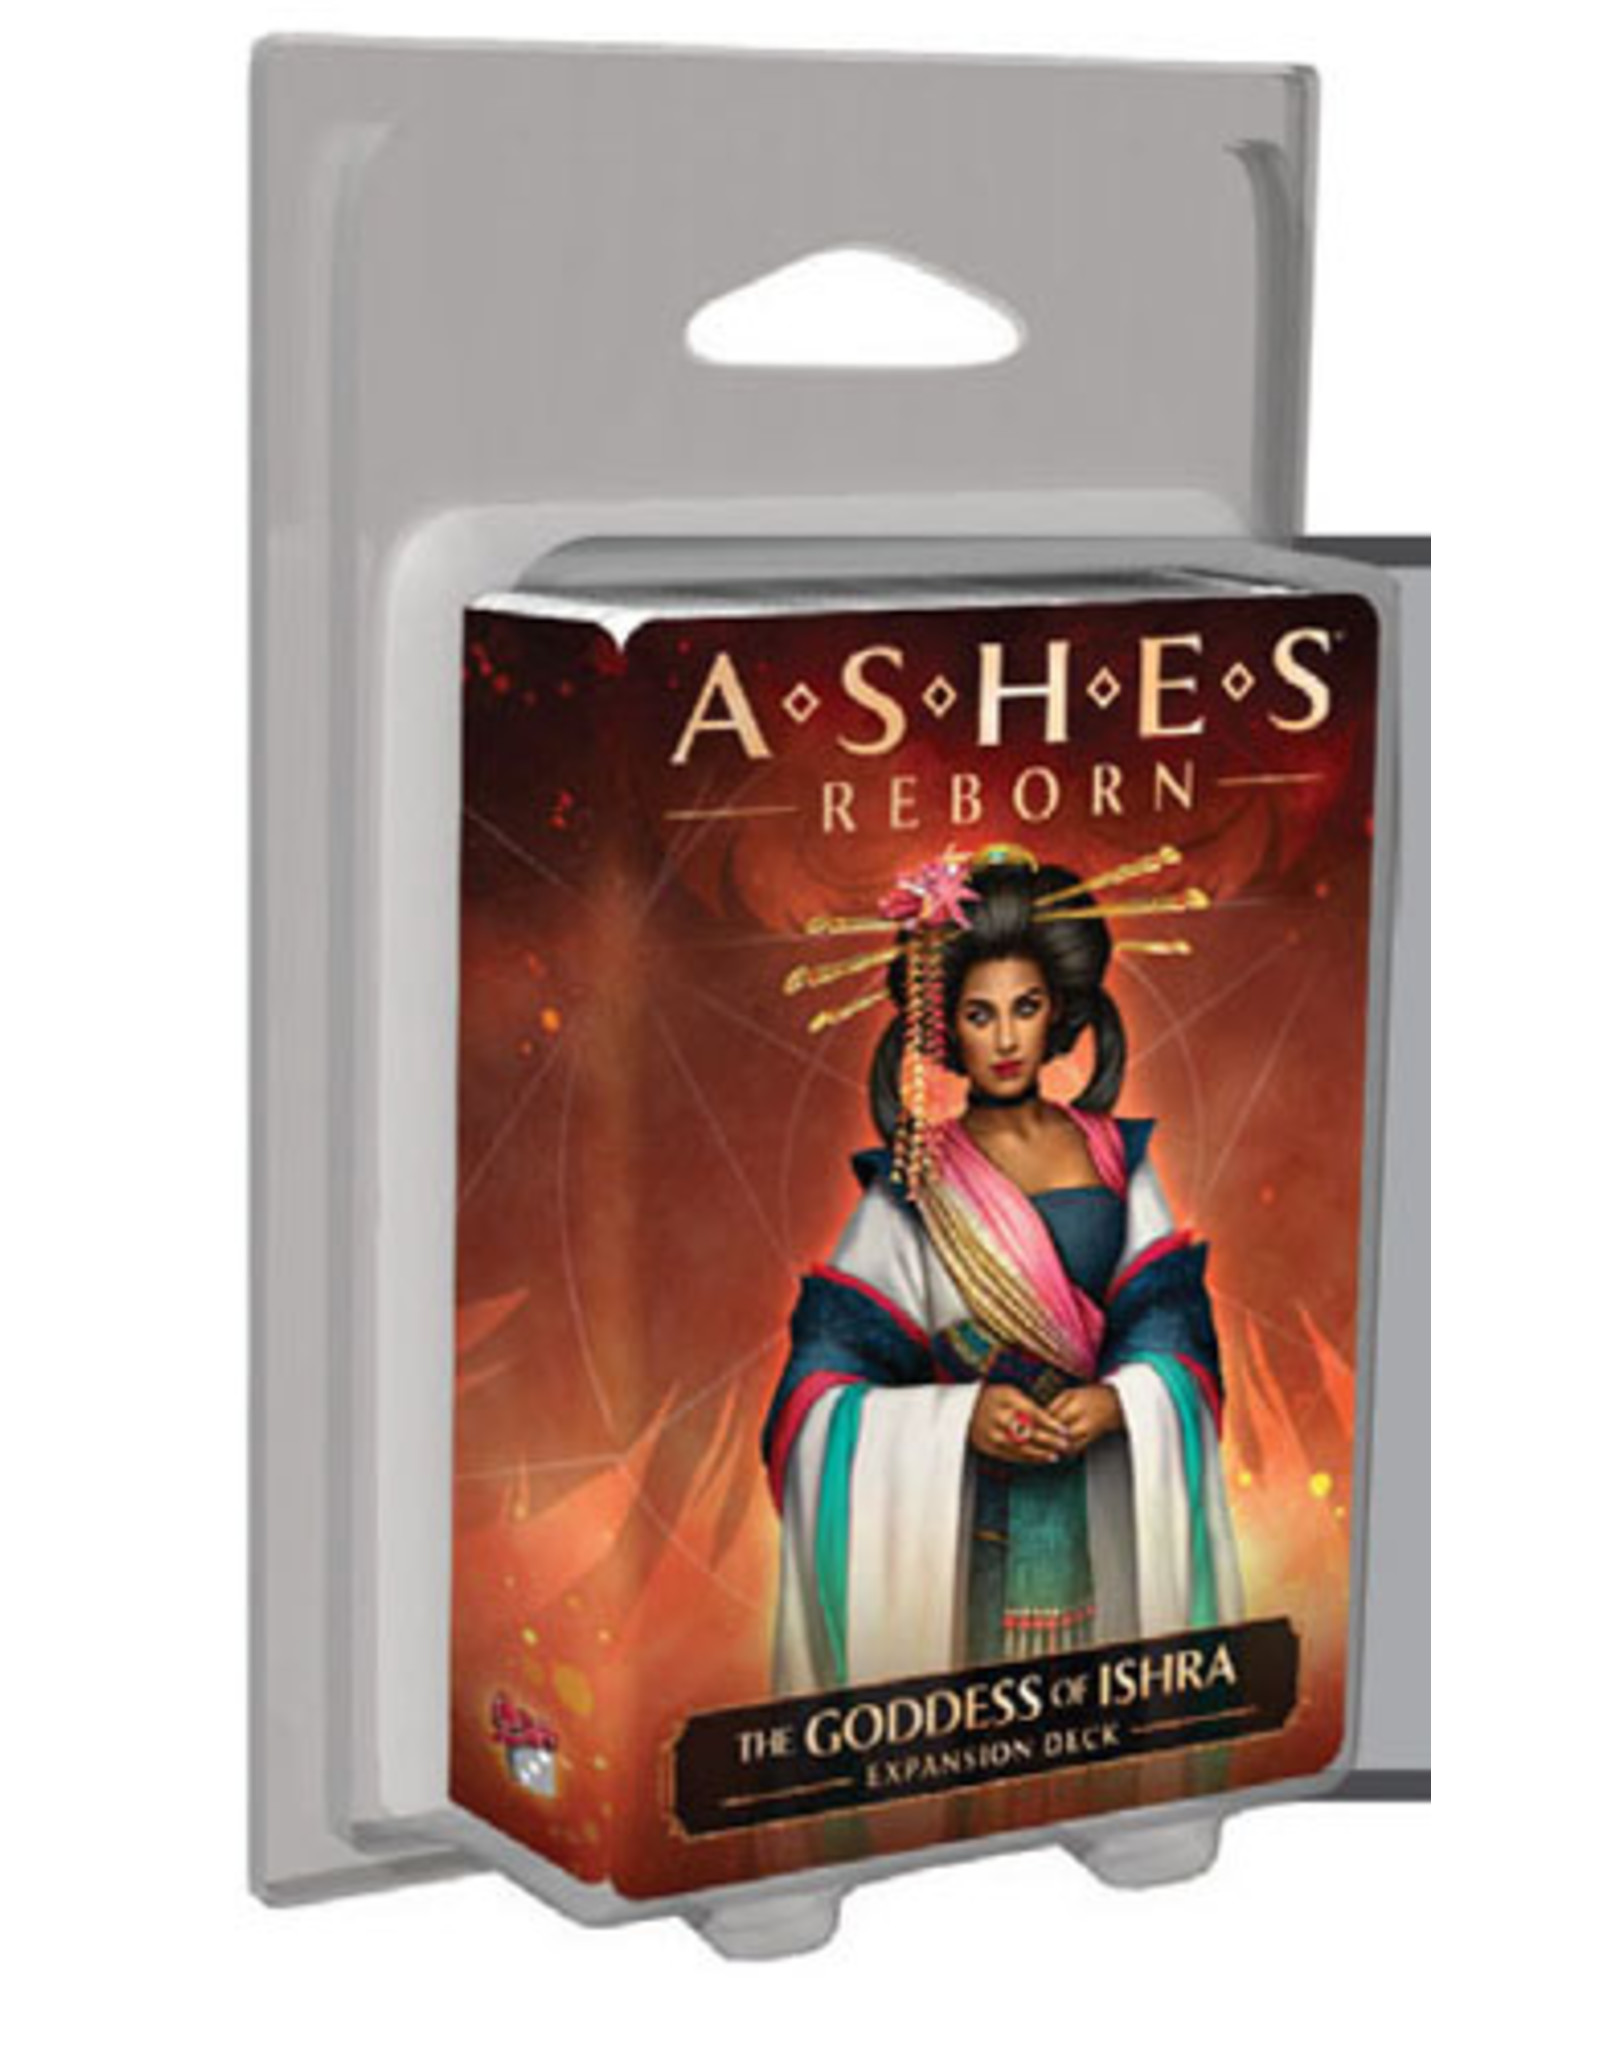 Ashes Reborn The Goddess of Ishra